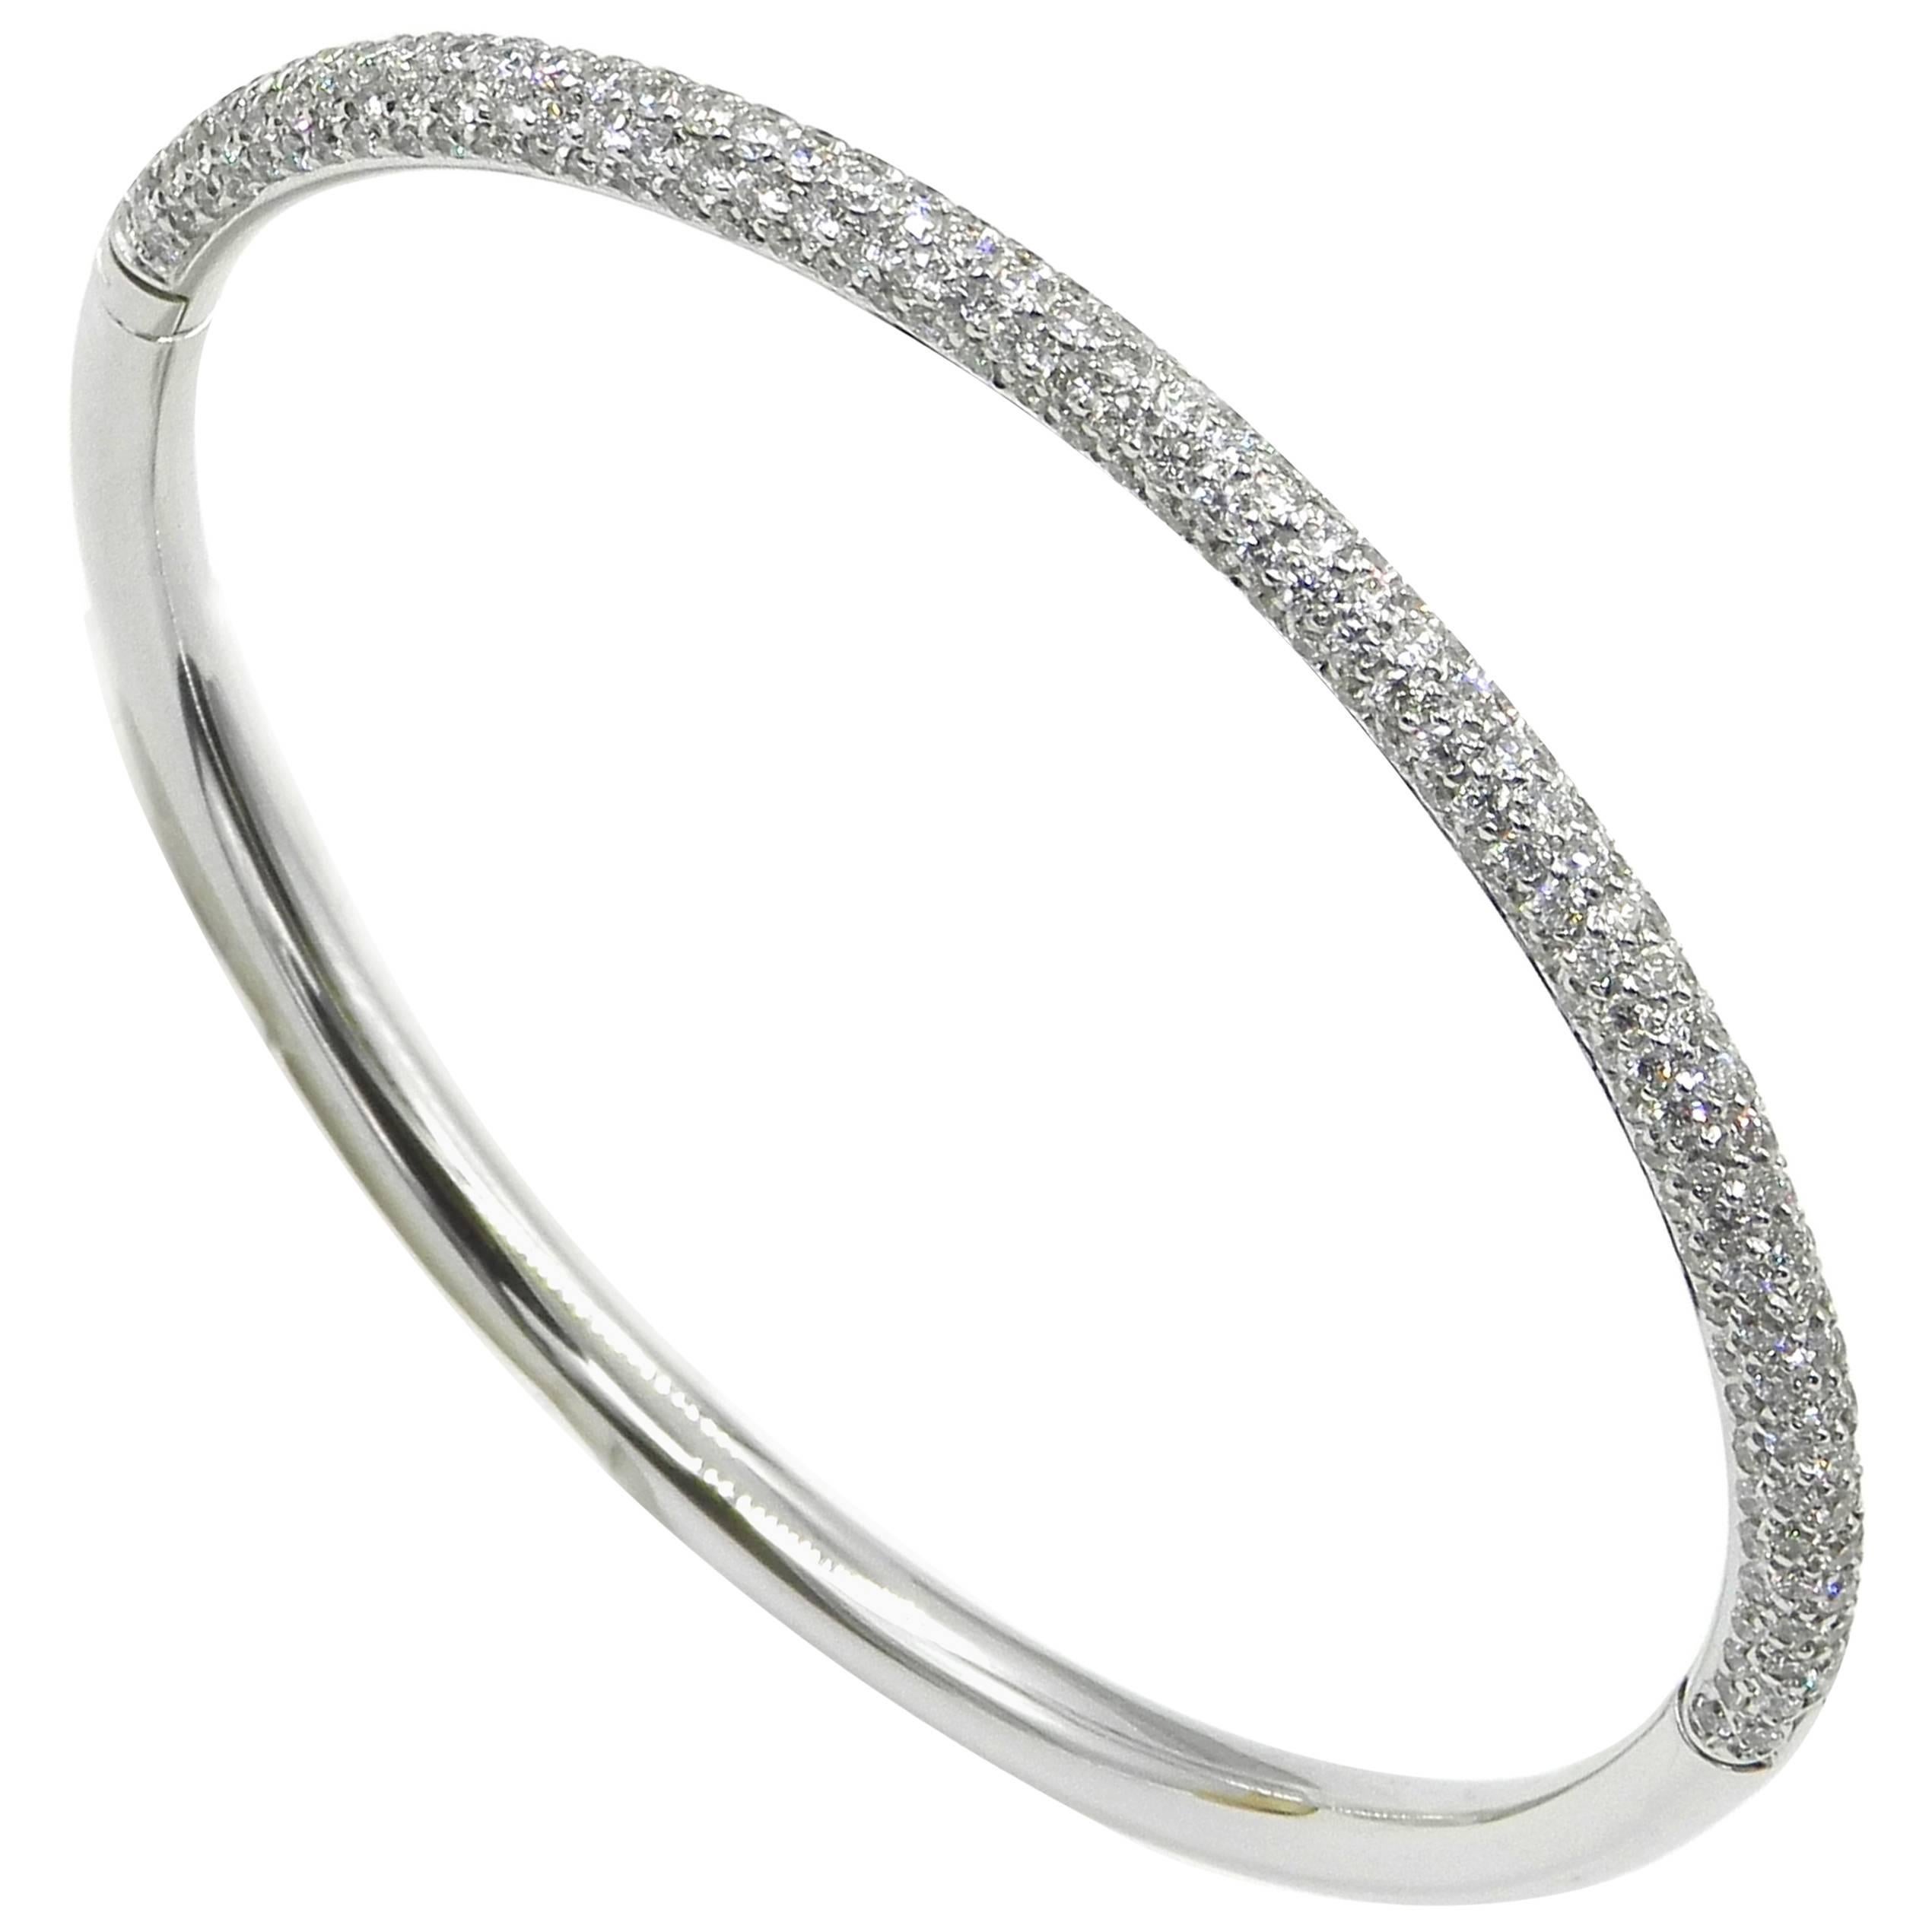 18 Karat White Gold Pave' Diamonds Garavelli Bangle Bracelet